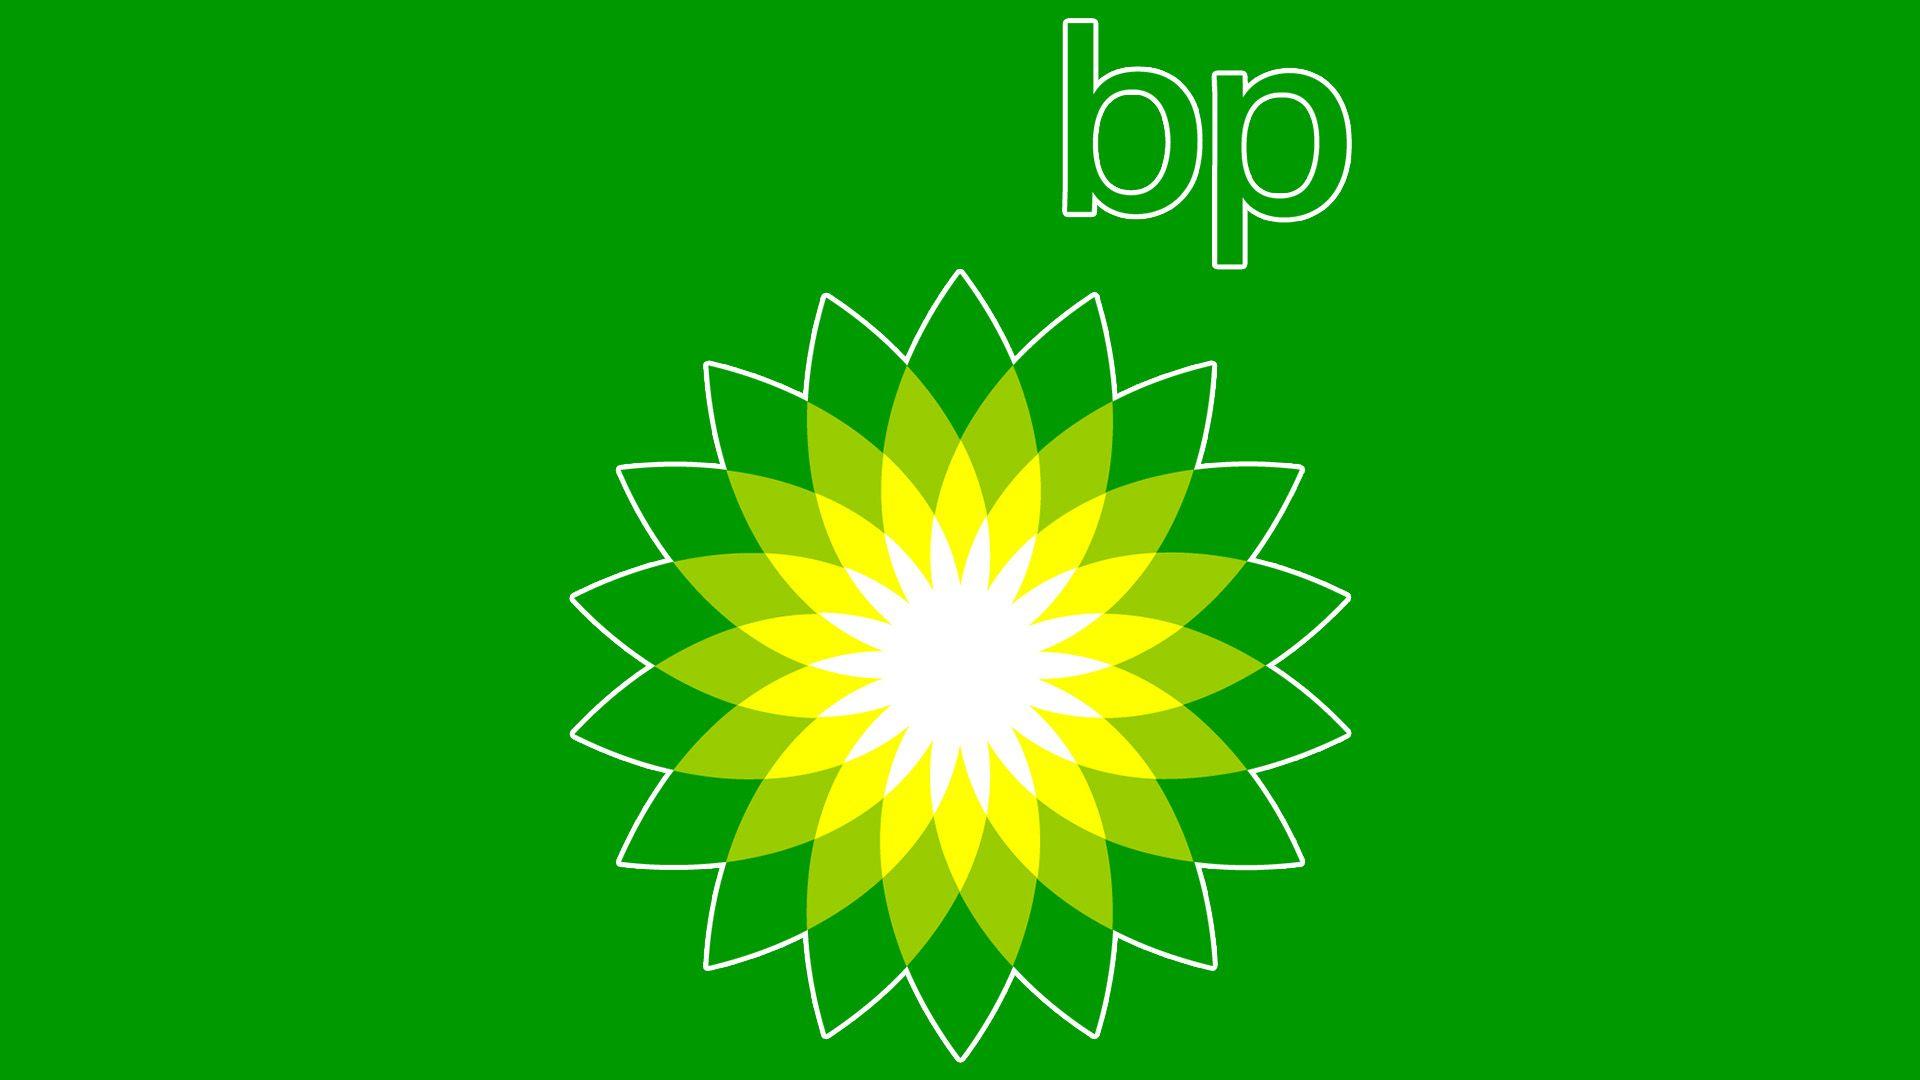 Green Flower Shape of Logo - BP Logo, British Petroleum Symbol Meaning, History and Evolution